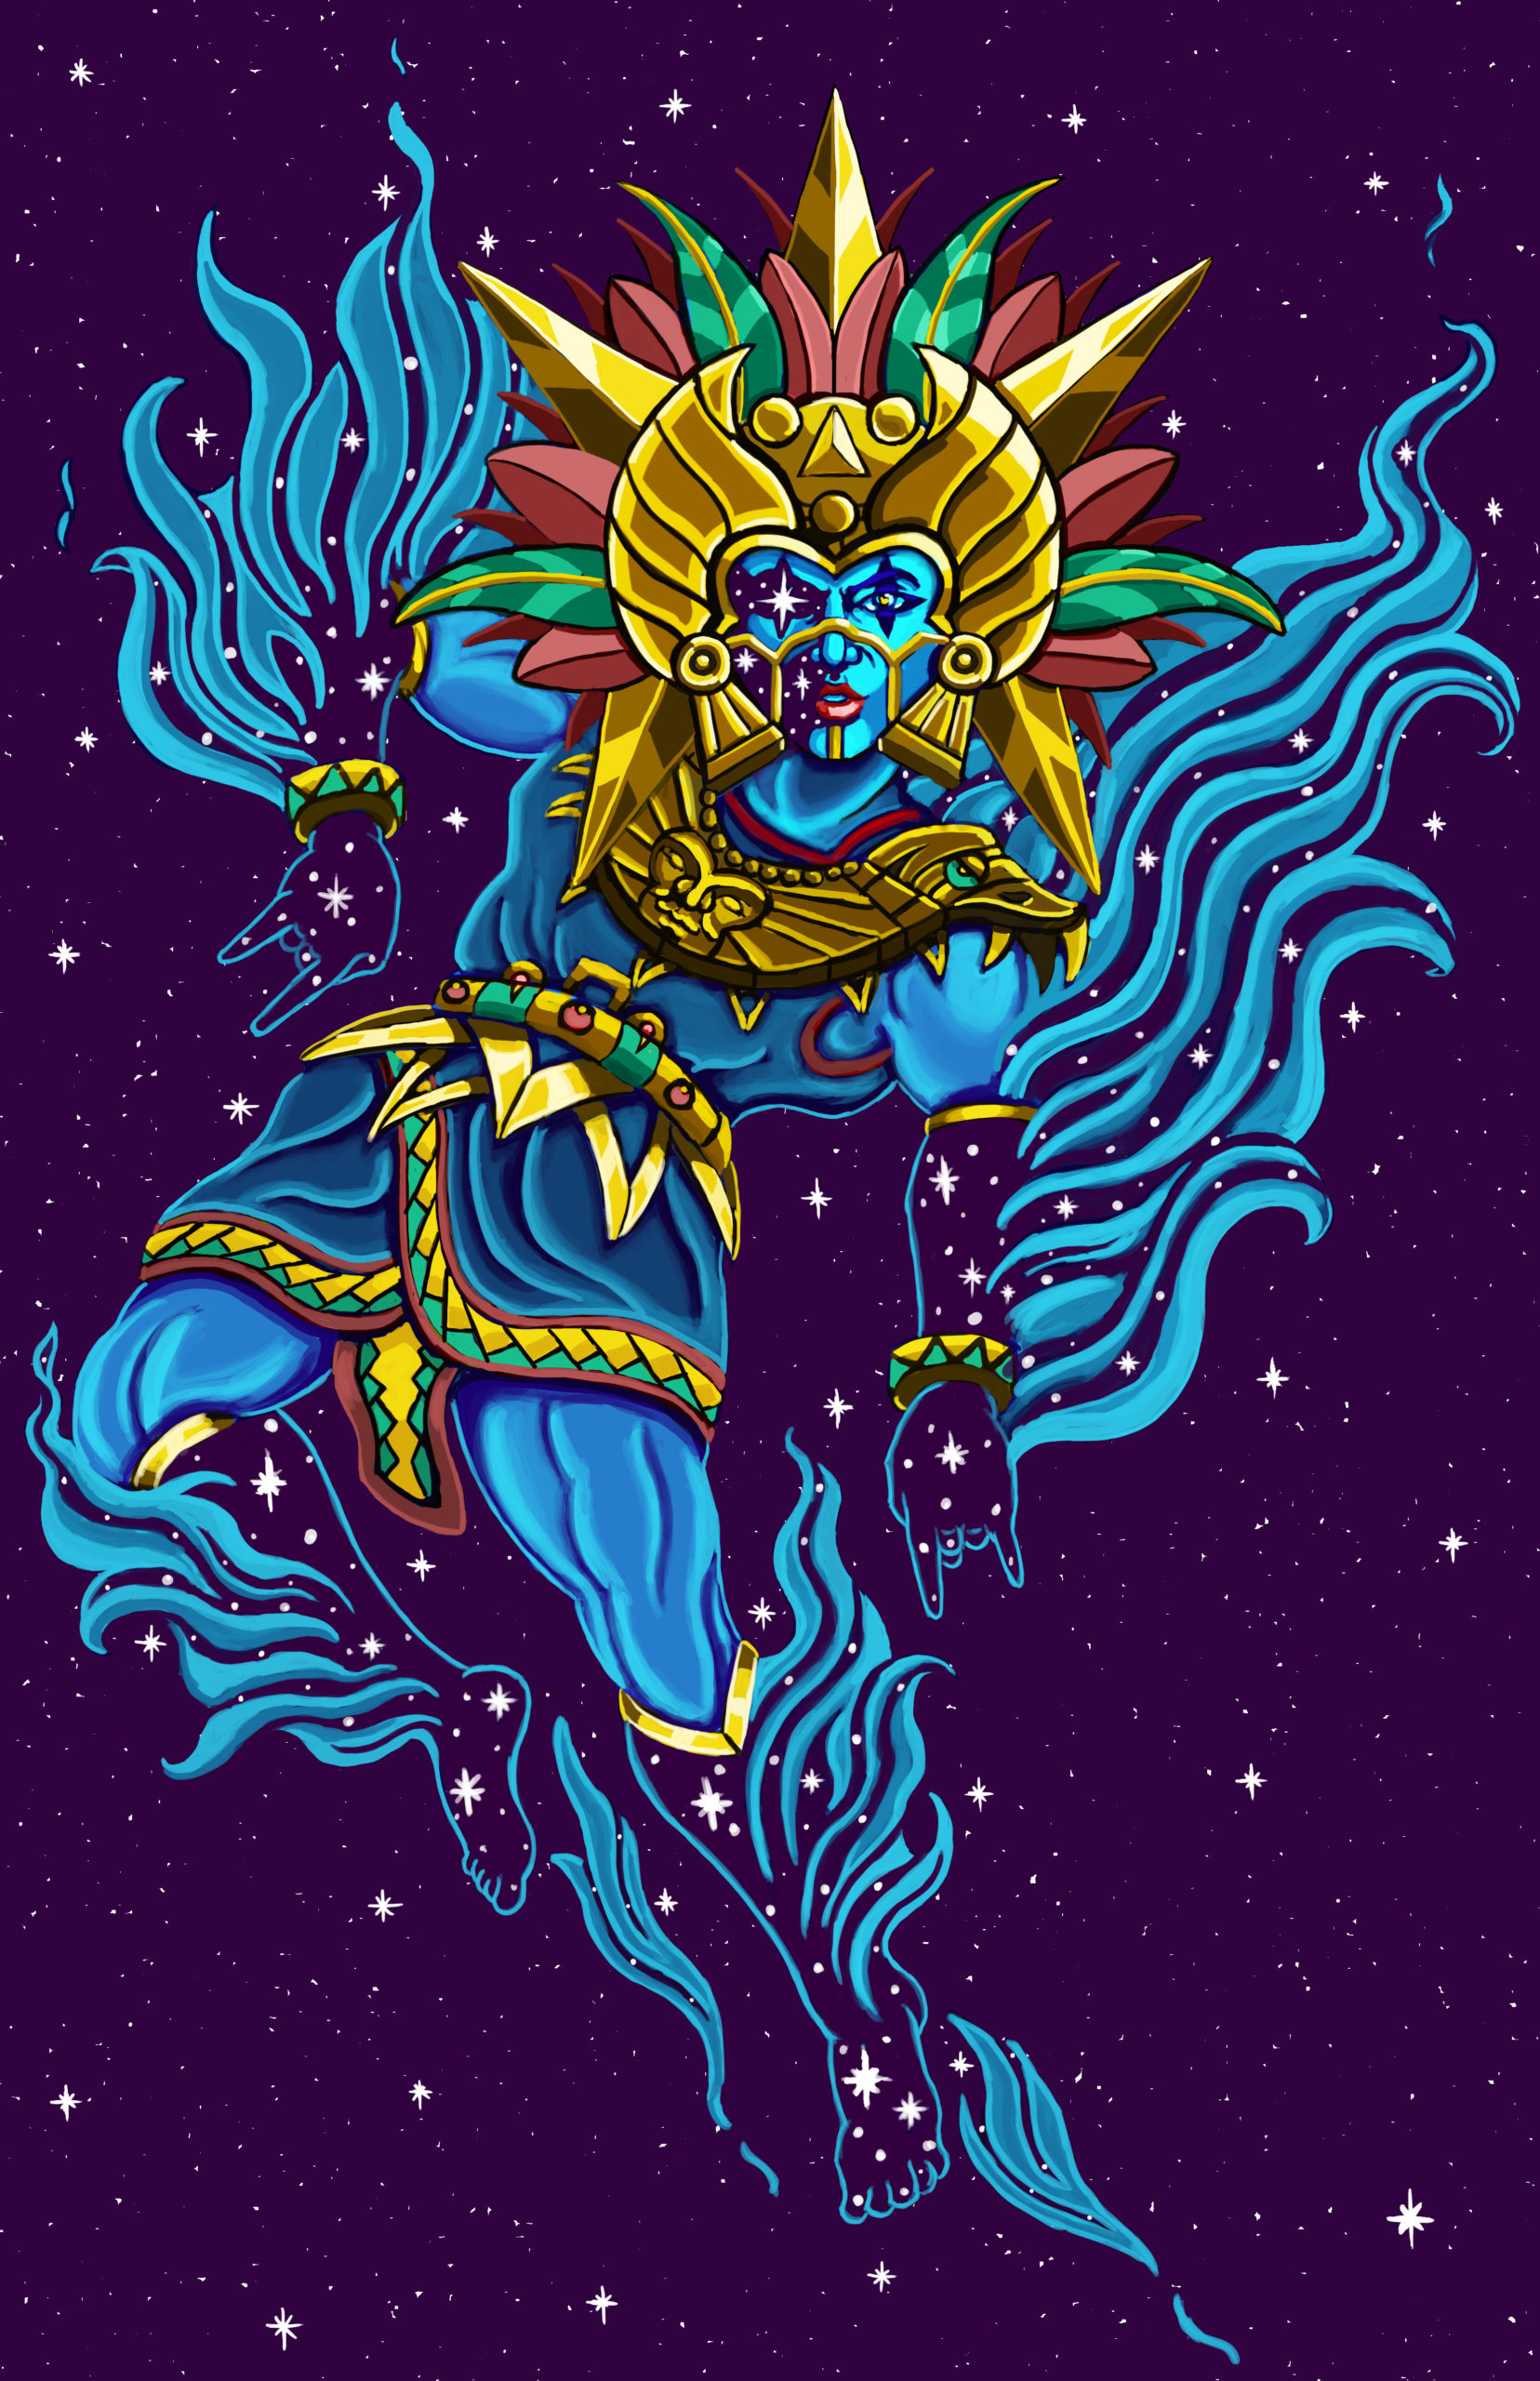 Alonso Holguin art titled Aztec Goddess